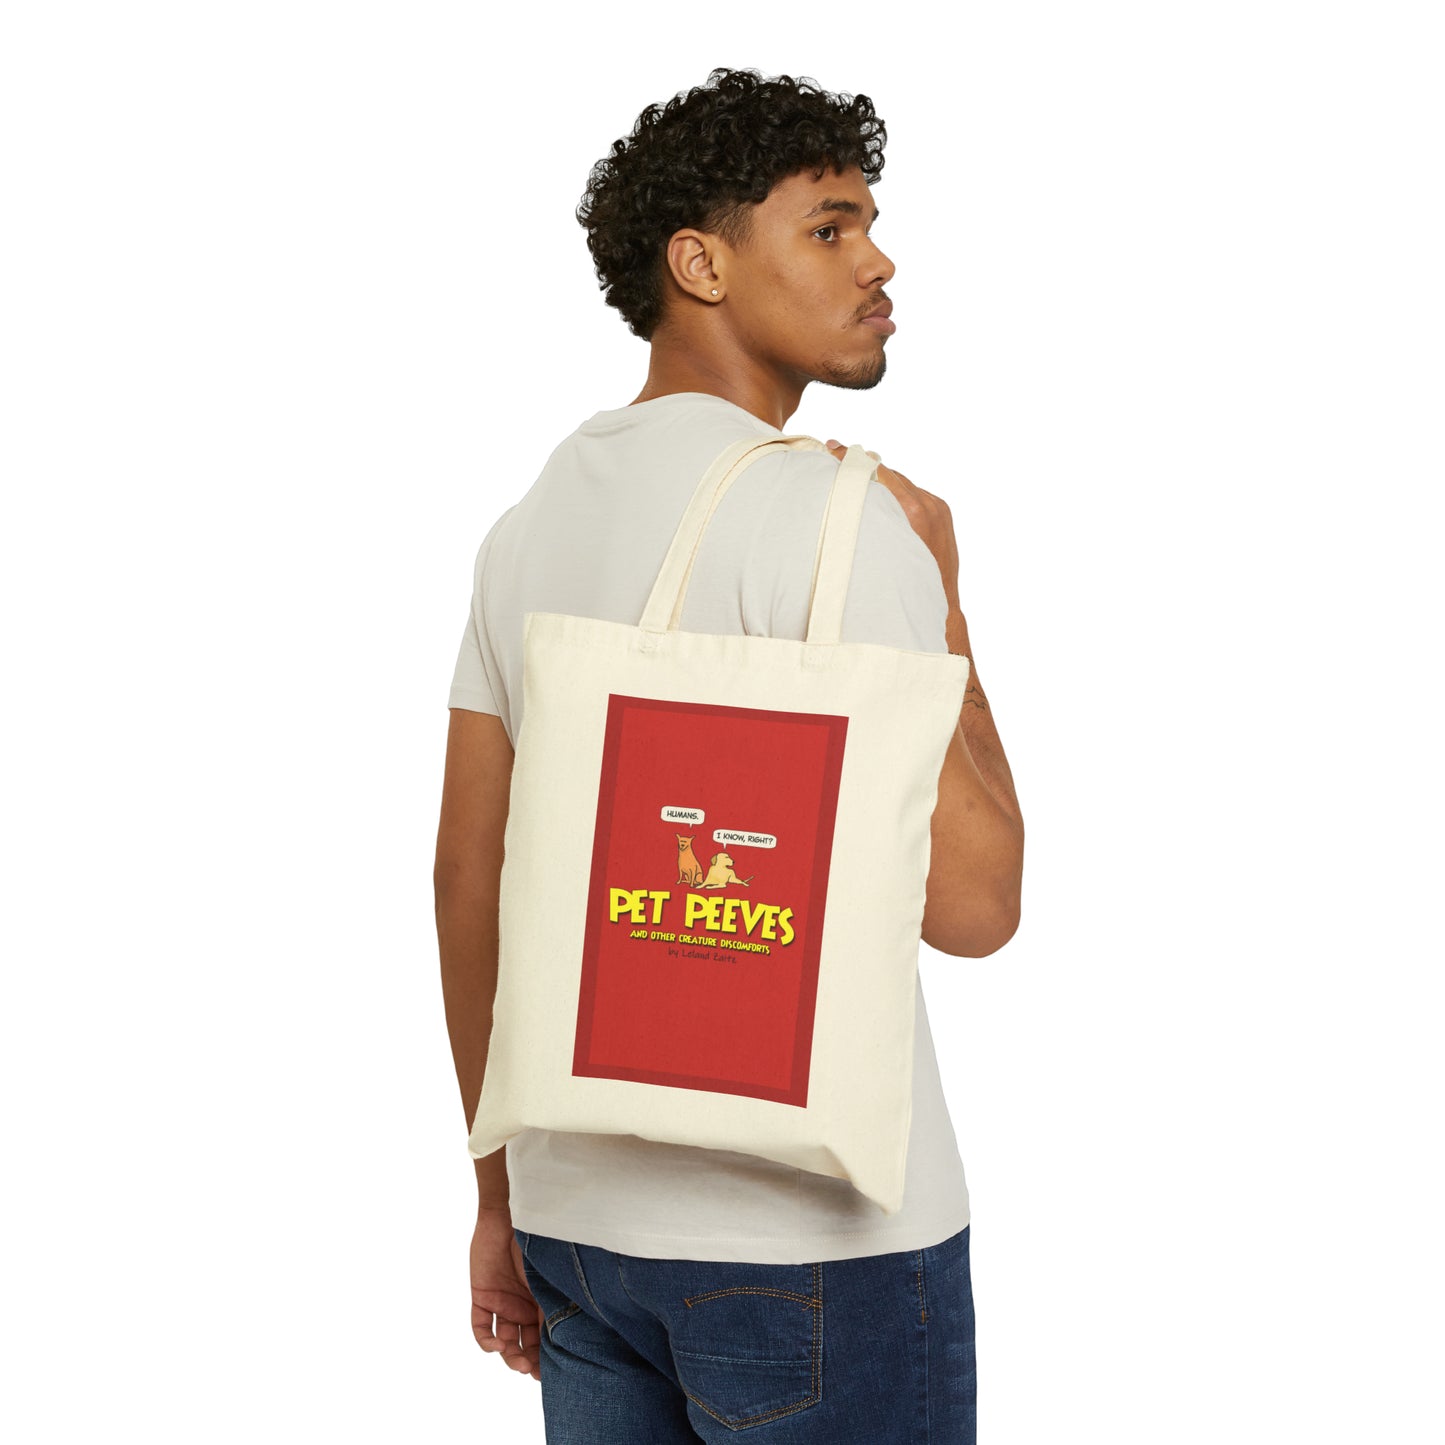 Pet Peeves - Cotton Canvas Tote Bag